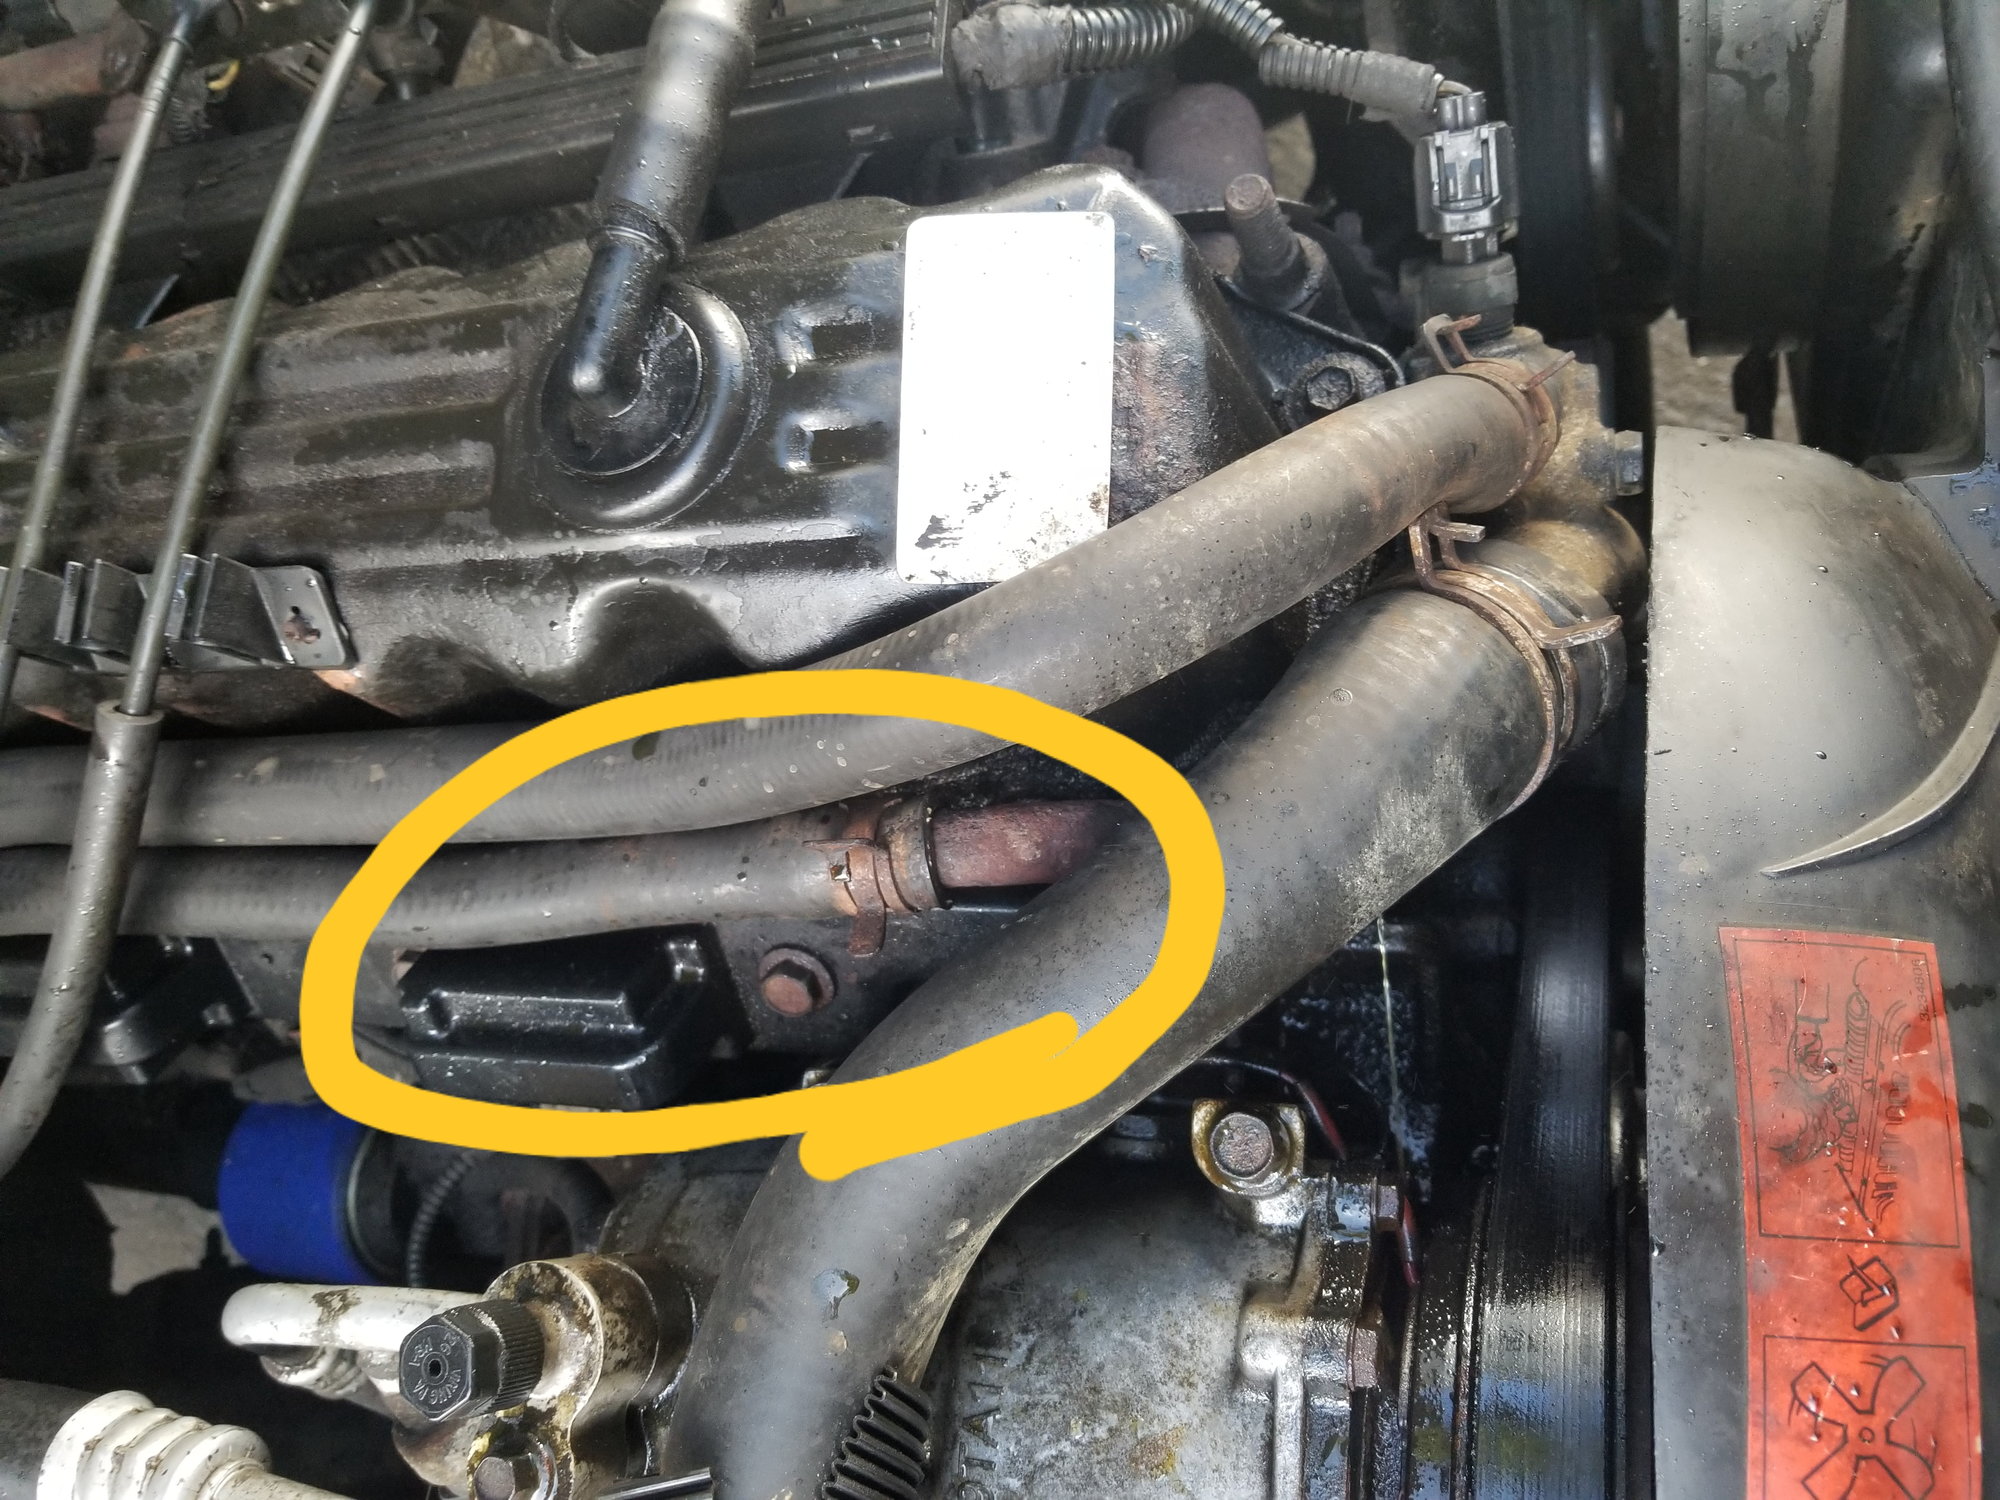 Radiator leak, pin hole leak from water pump inlet pipe. - Jeep Cherokee  Forum